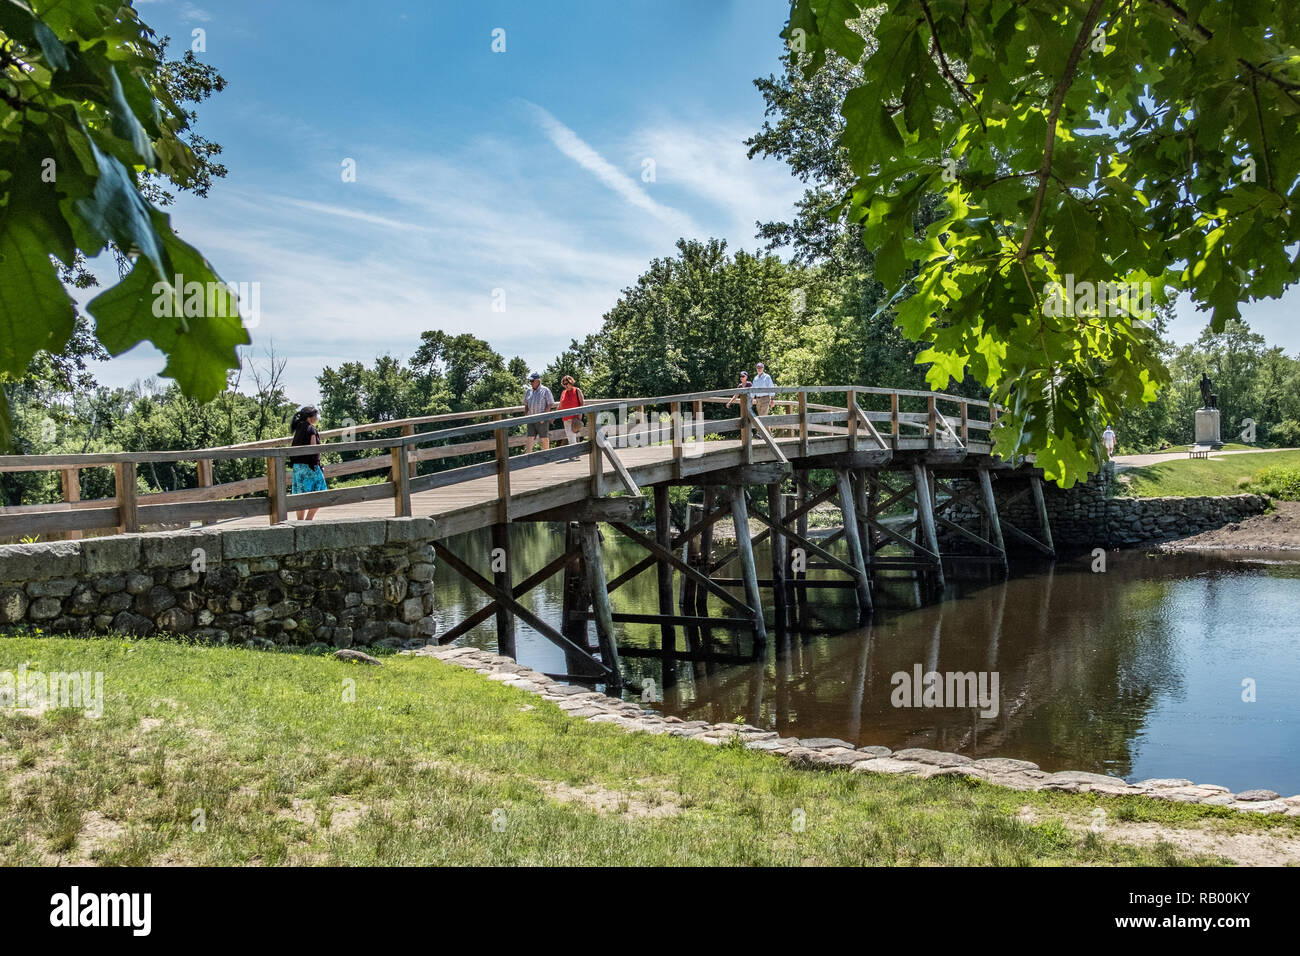 The Old North Bridge in Concord, Massachusetts Stock Photo